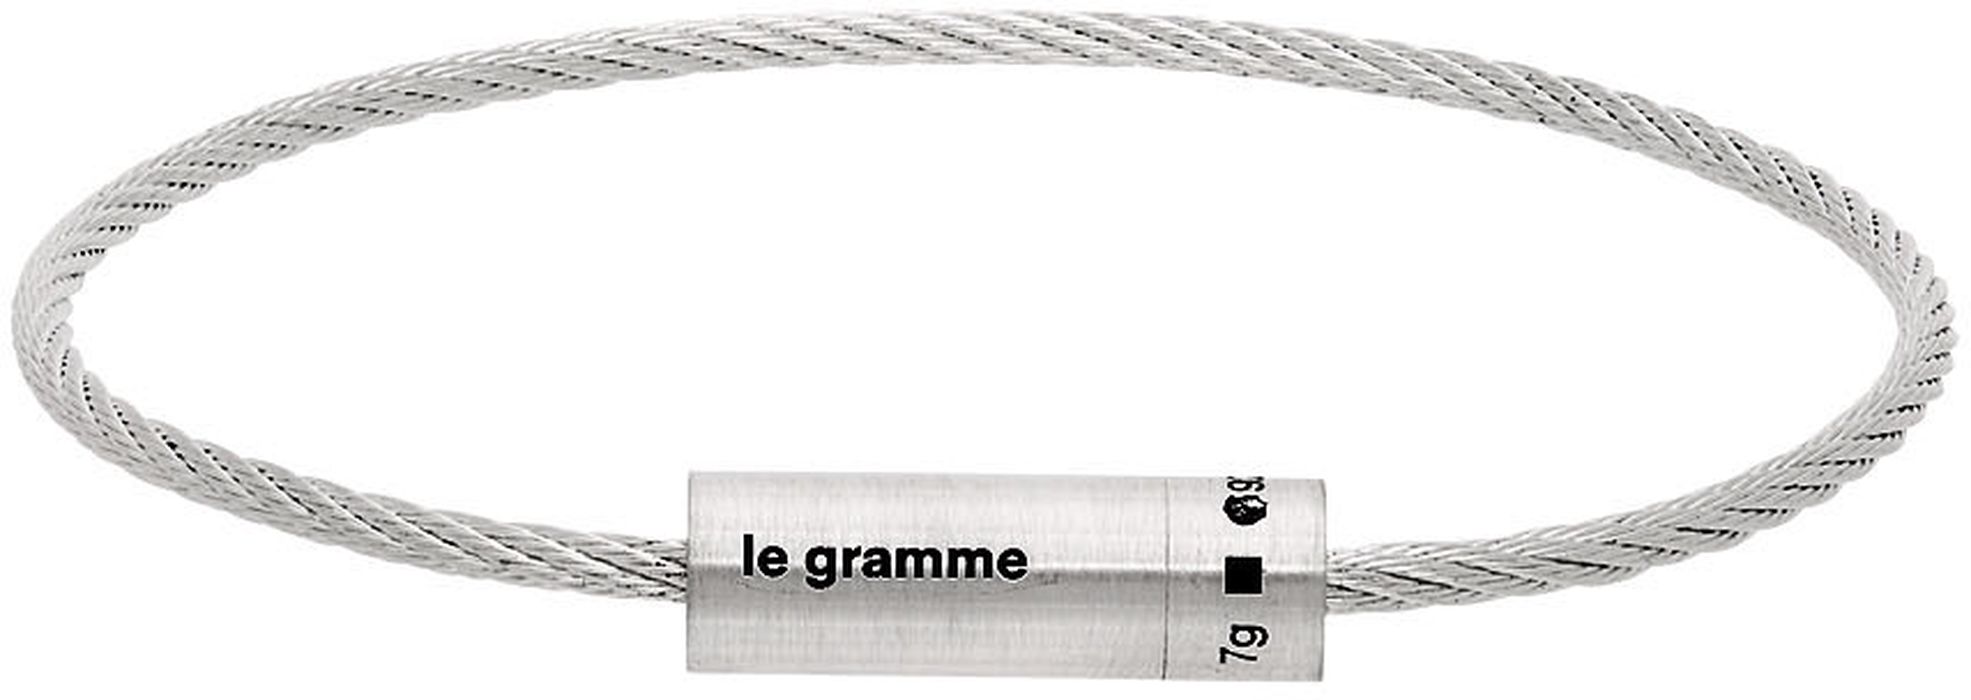 Le Gramme Silver Brushed 'Le 7 Grammes' Cable Bracelet